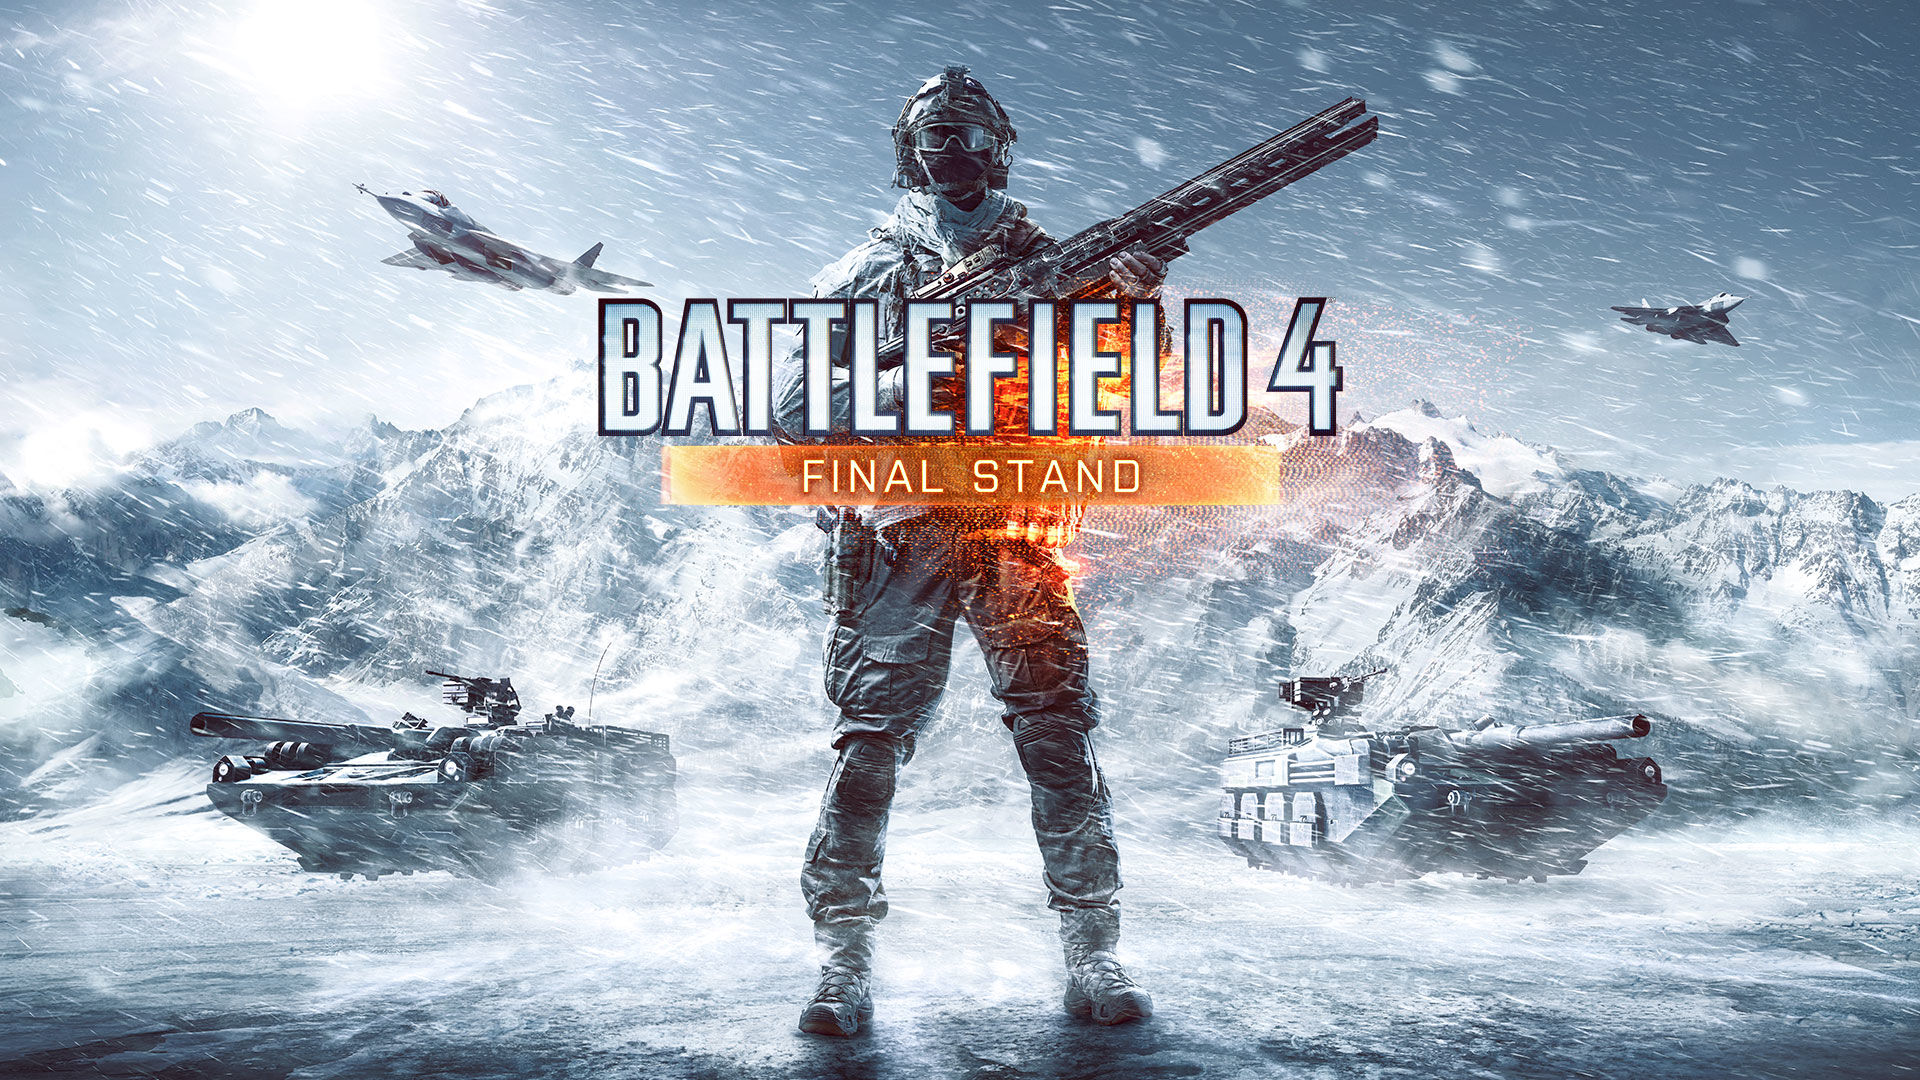 Battlefield4(배틀필드4) - Final Stand Main theme